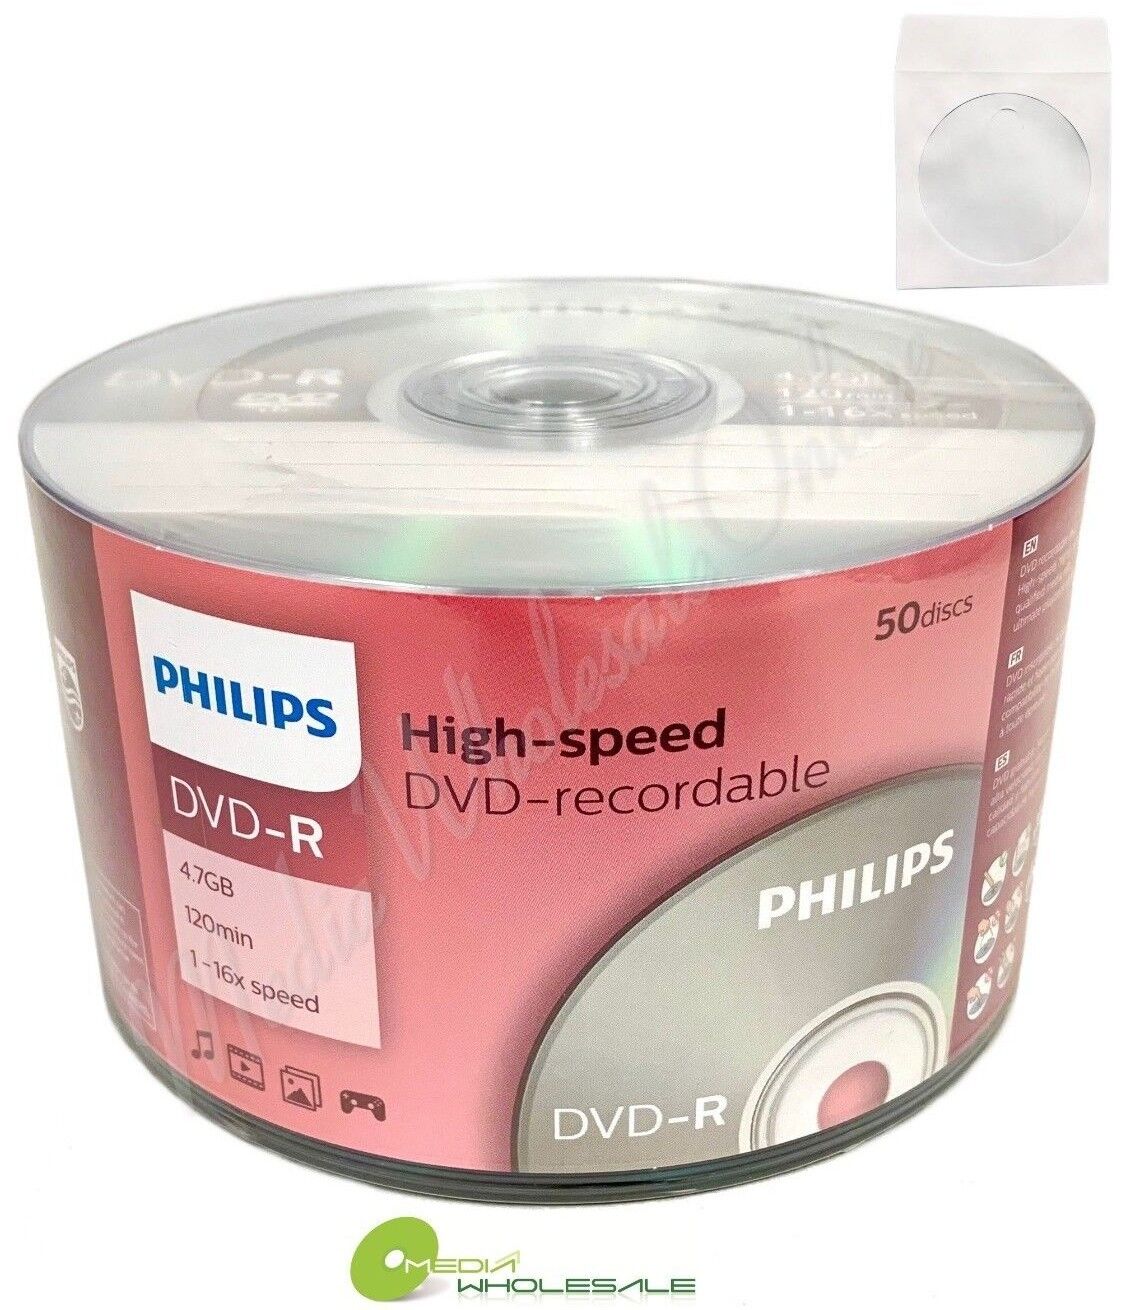 100 PHILIPS DVD-R Logo 16X 4.7GB Media Disc+100 Premium White Paper Sleeves